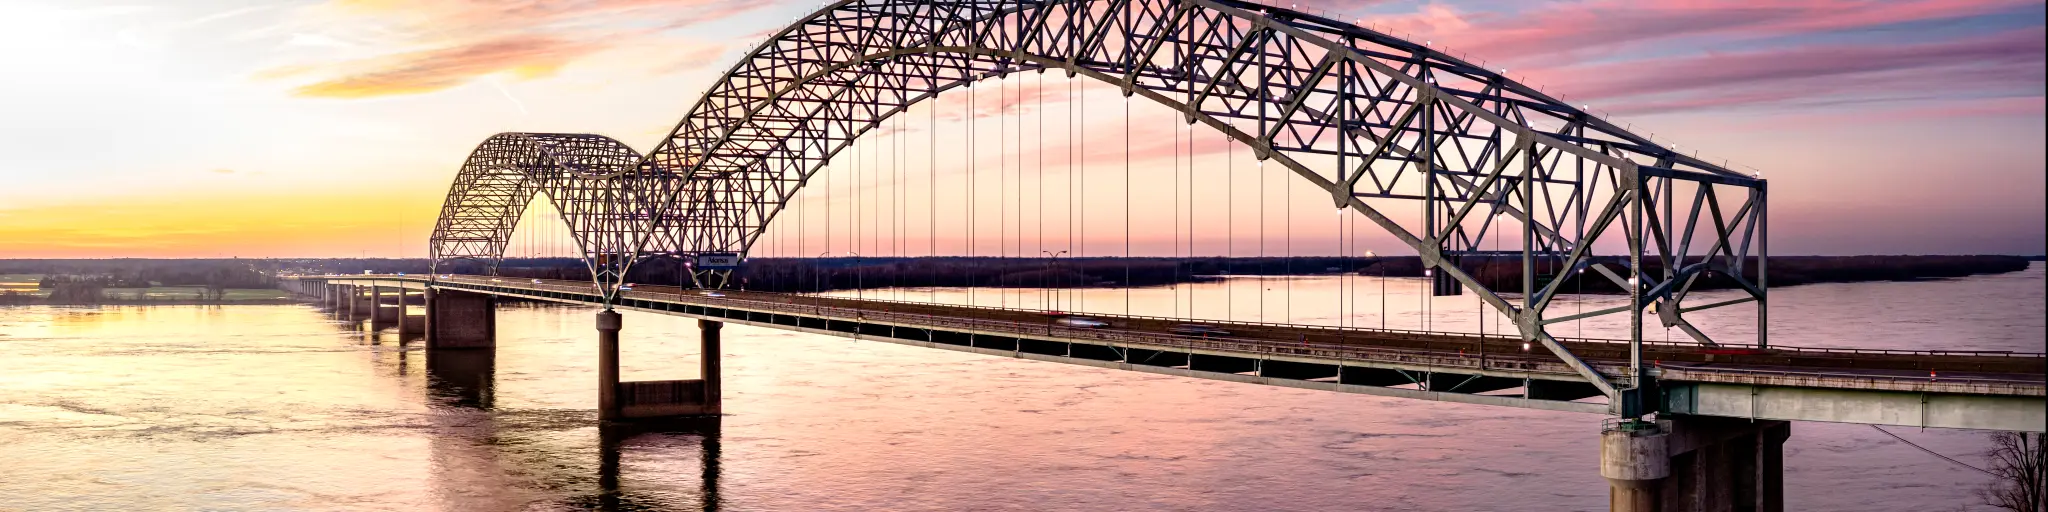 Hernando de Soto Bridge connecting Memphis, Tennessee with West Memphis, Arkansas at sunset.